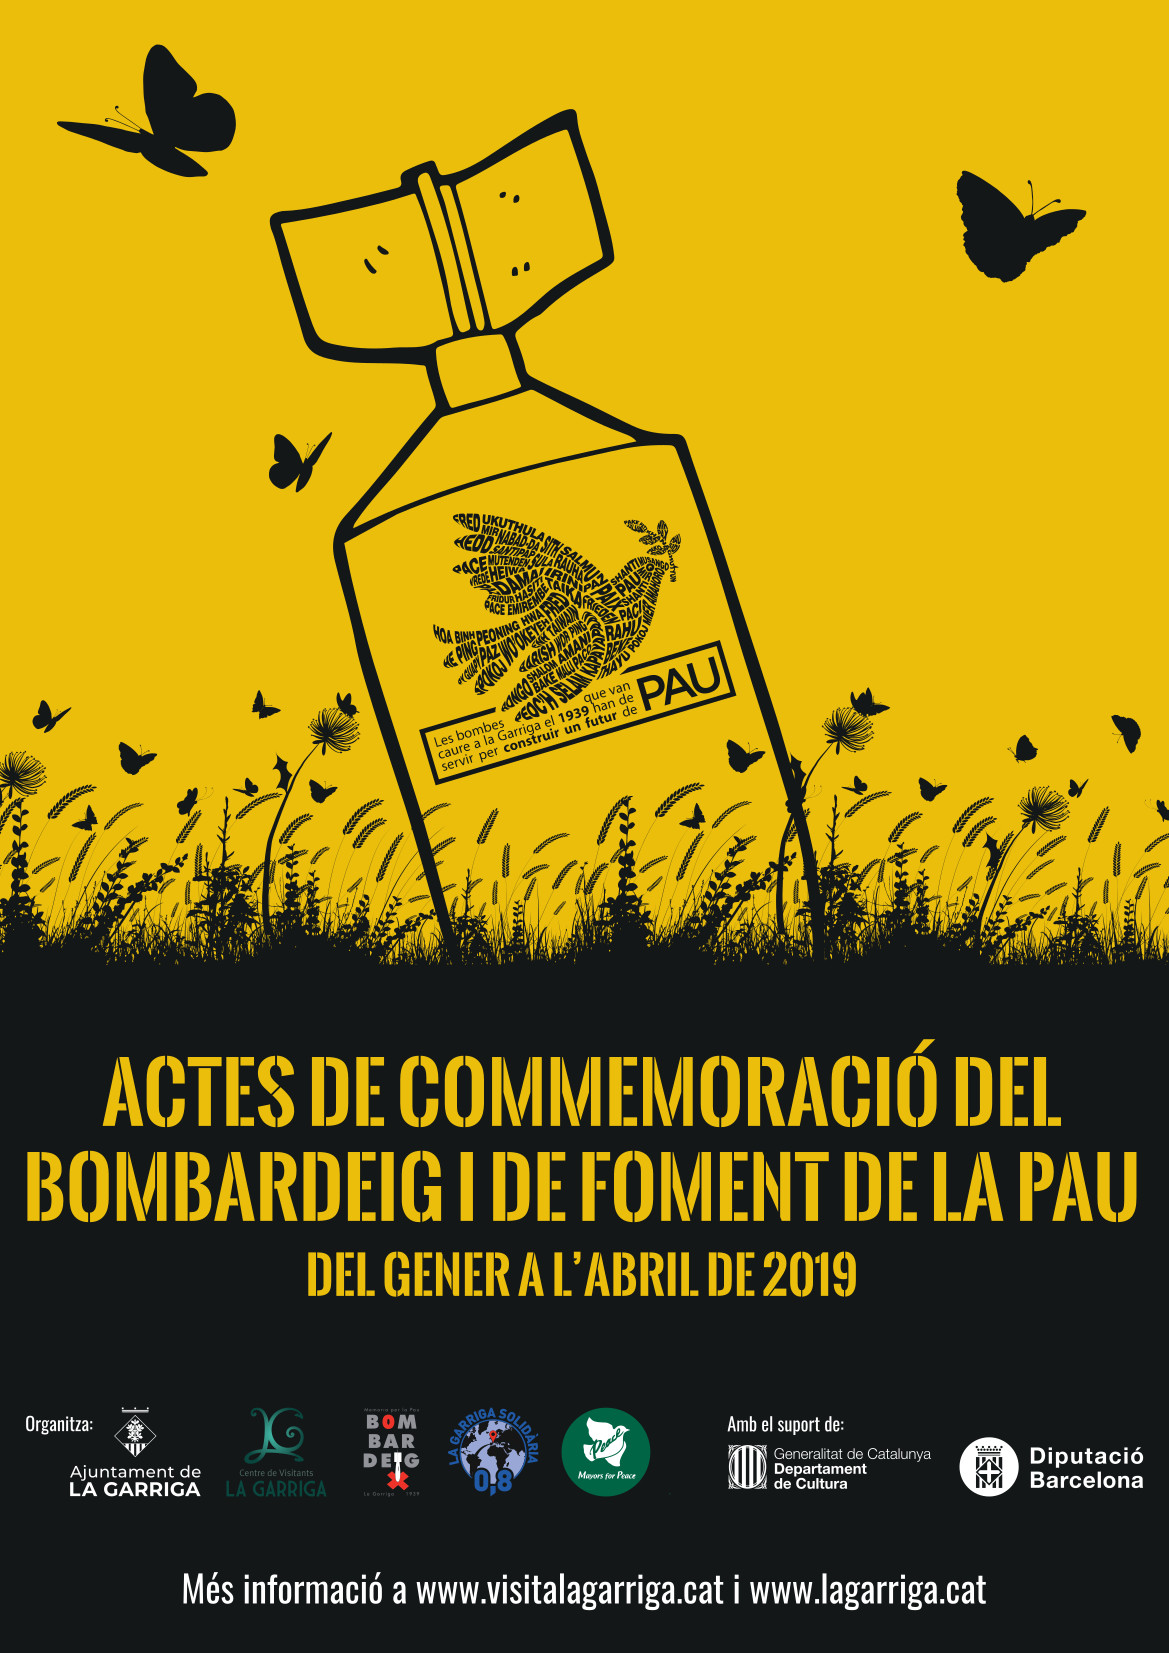 La Garriga commemora el 80è aniversari del bombardeig